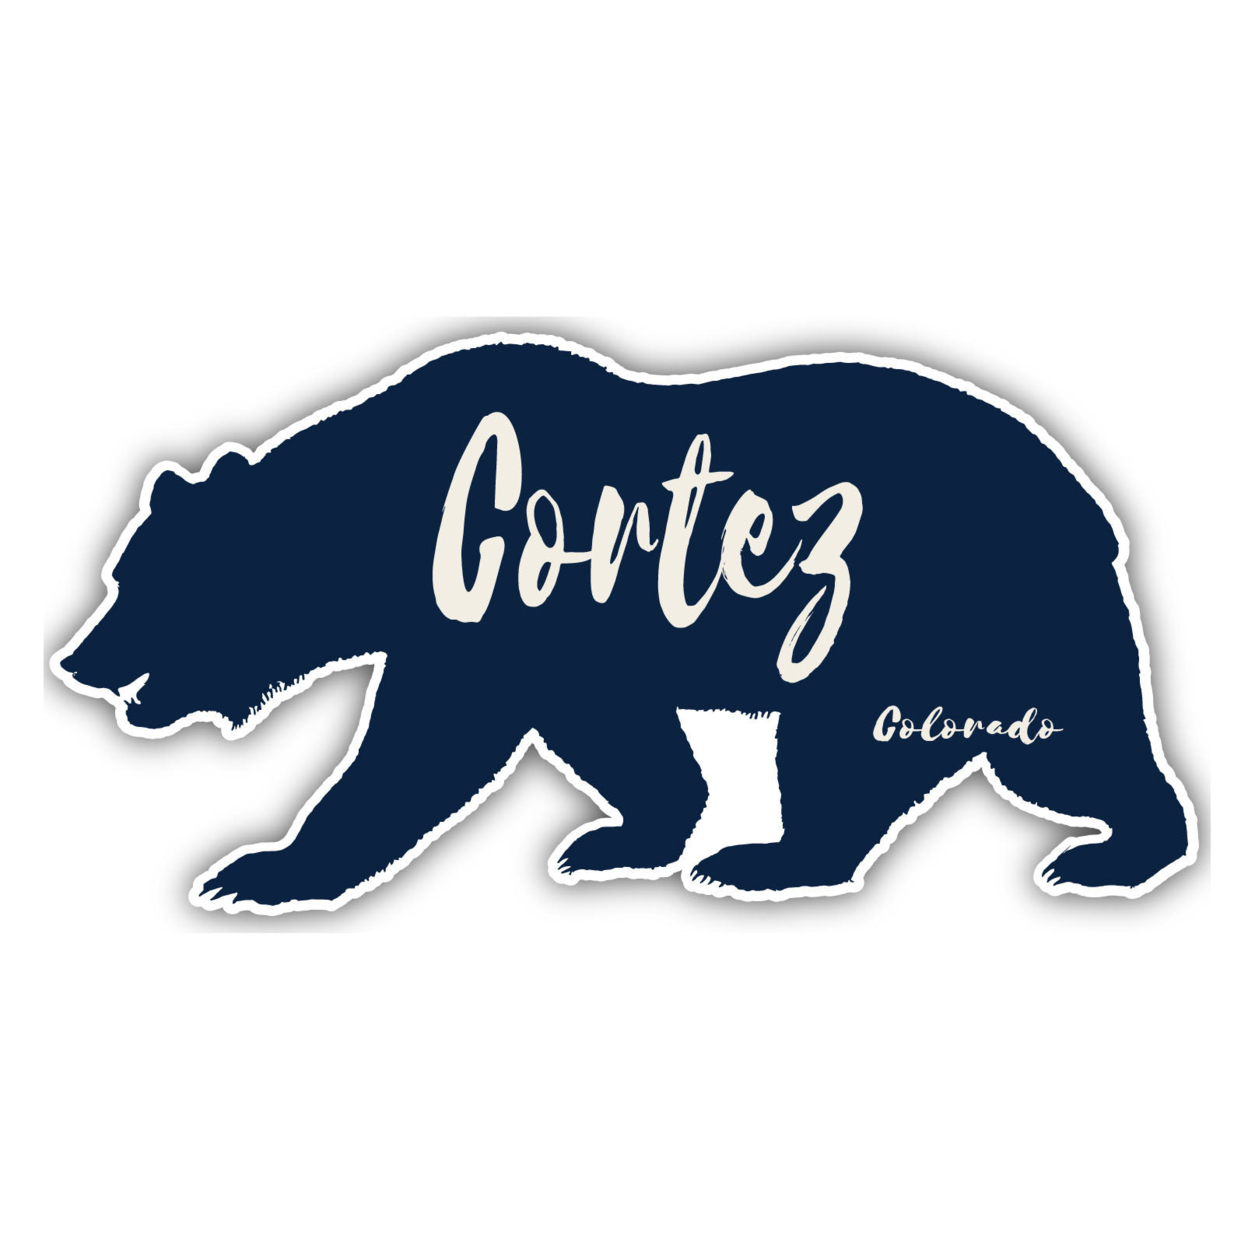 Cortez Colorado Souvenir Decorative Stickers (Choose Theme And Size) - Single Unit, 8-Inch, Camp Life